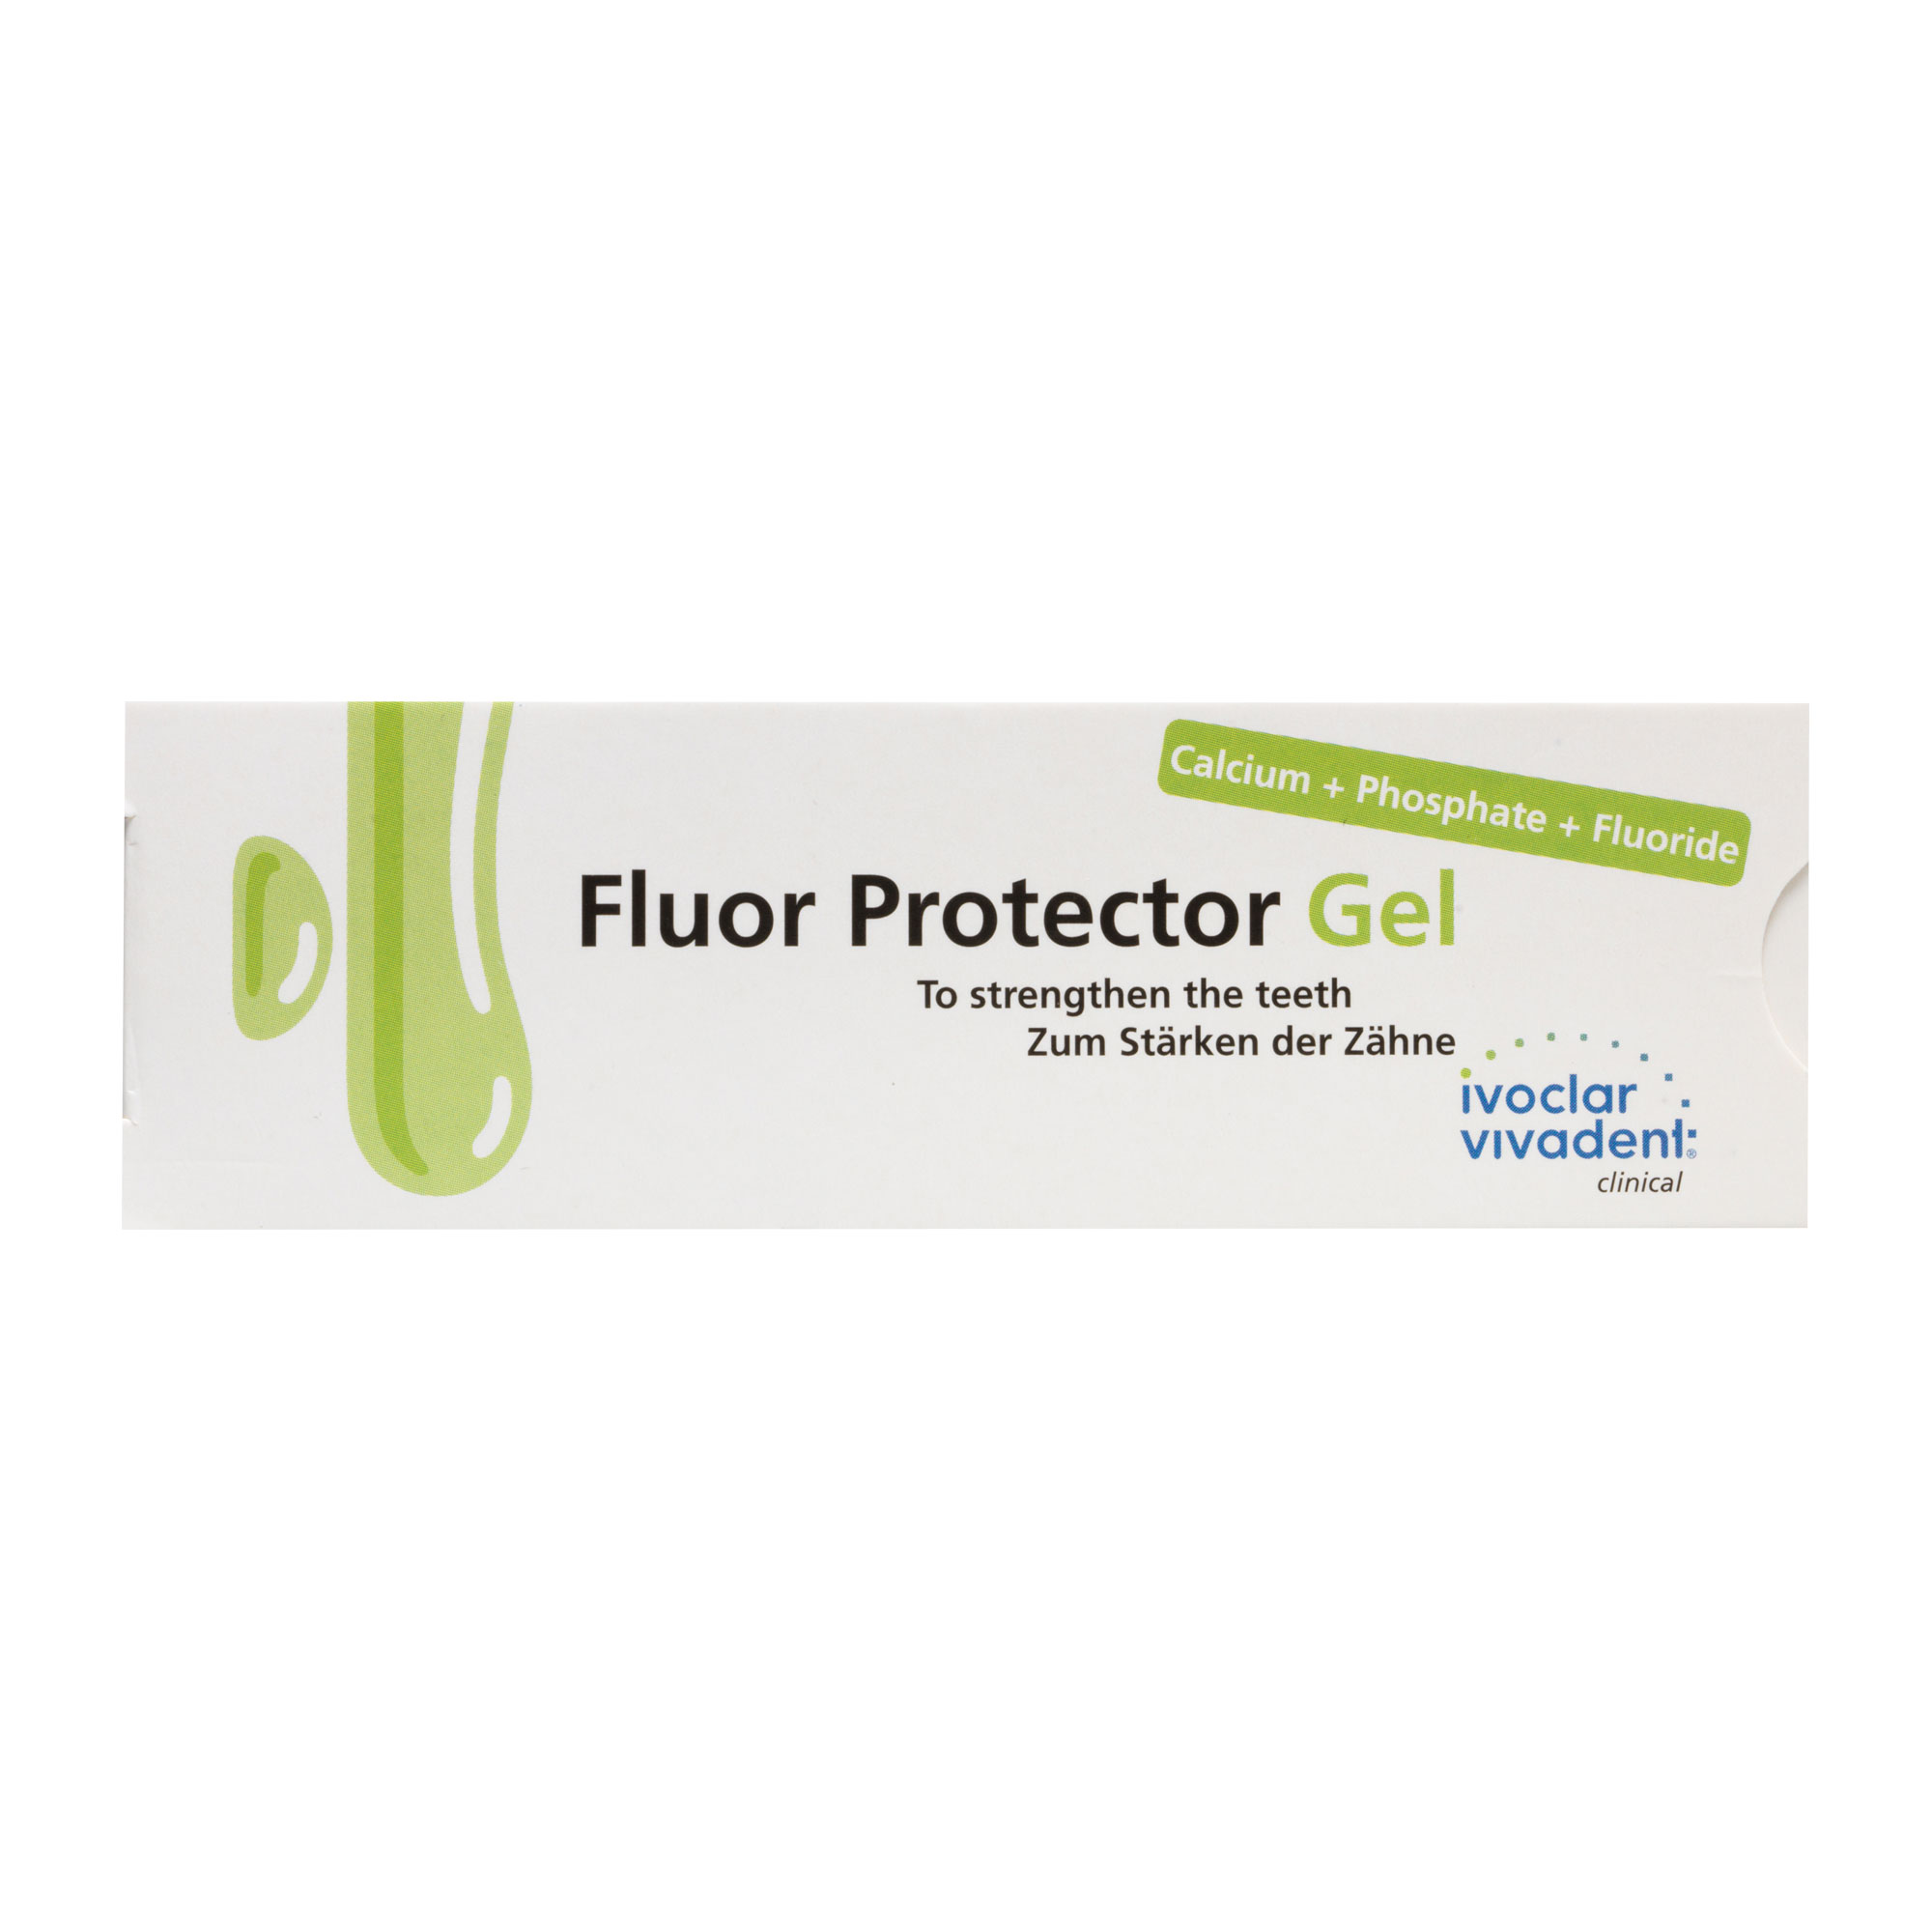 Fluor Protector Gel